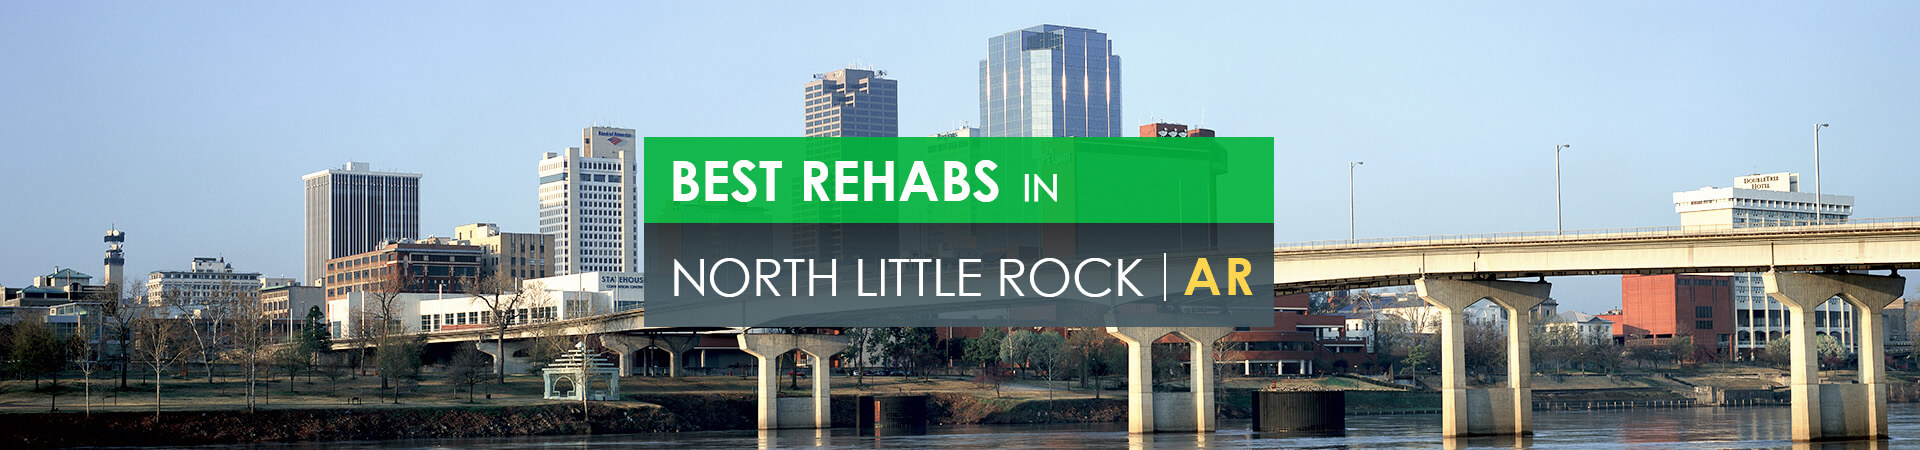 Best rehabs in North Little Rock, AR